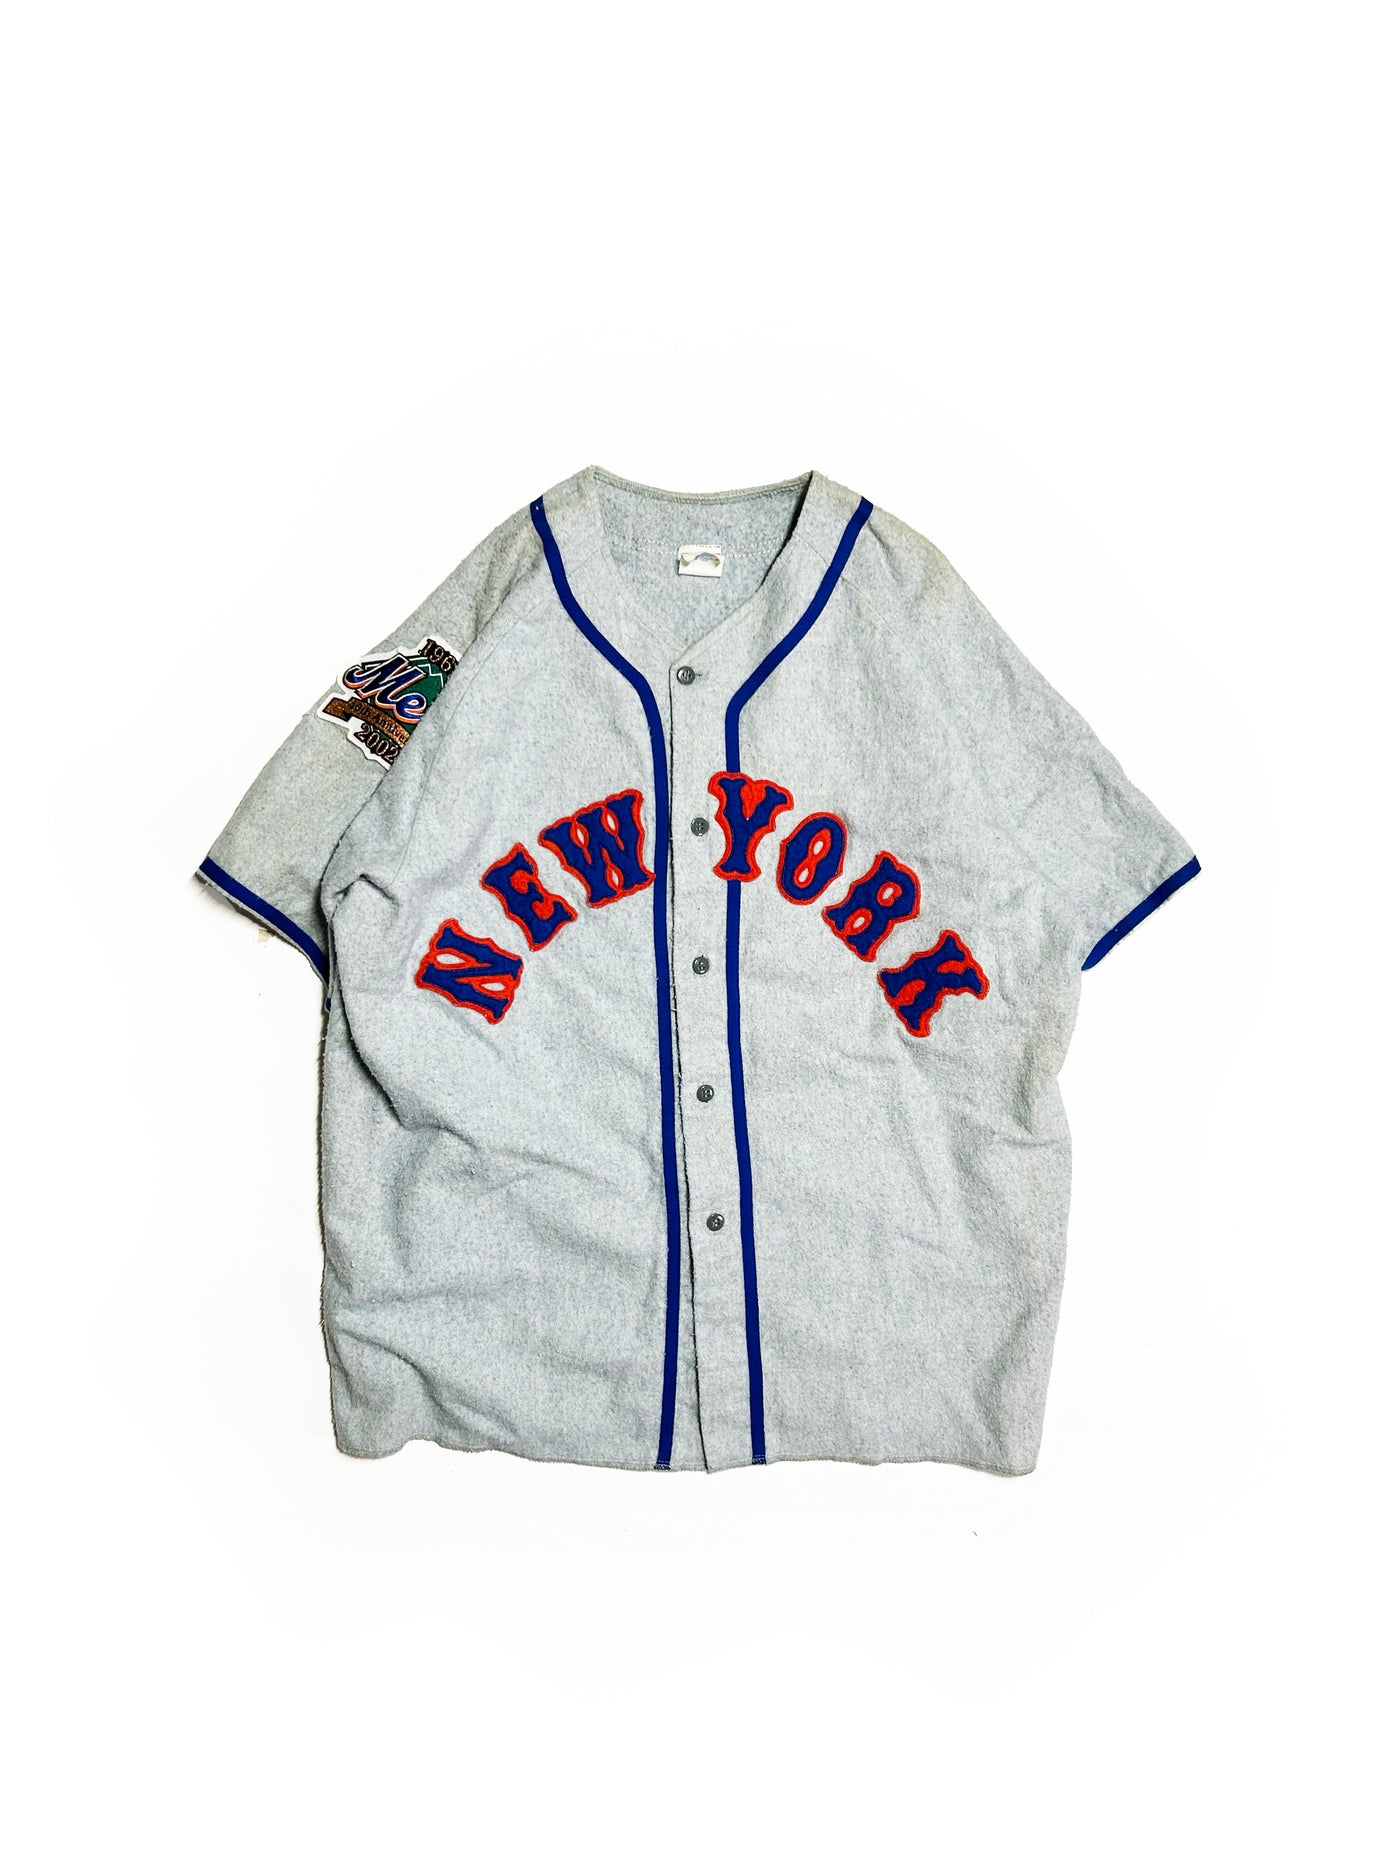 Vintage 1960s 100% Cotton Mets Jersey